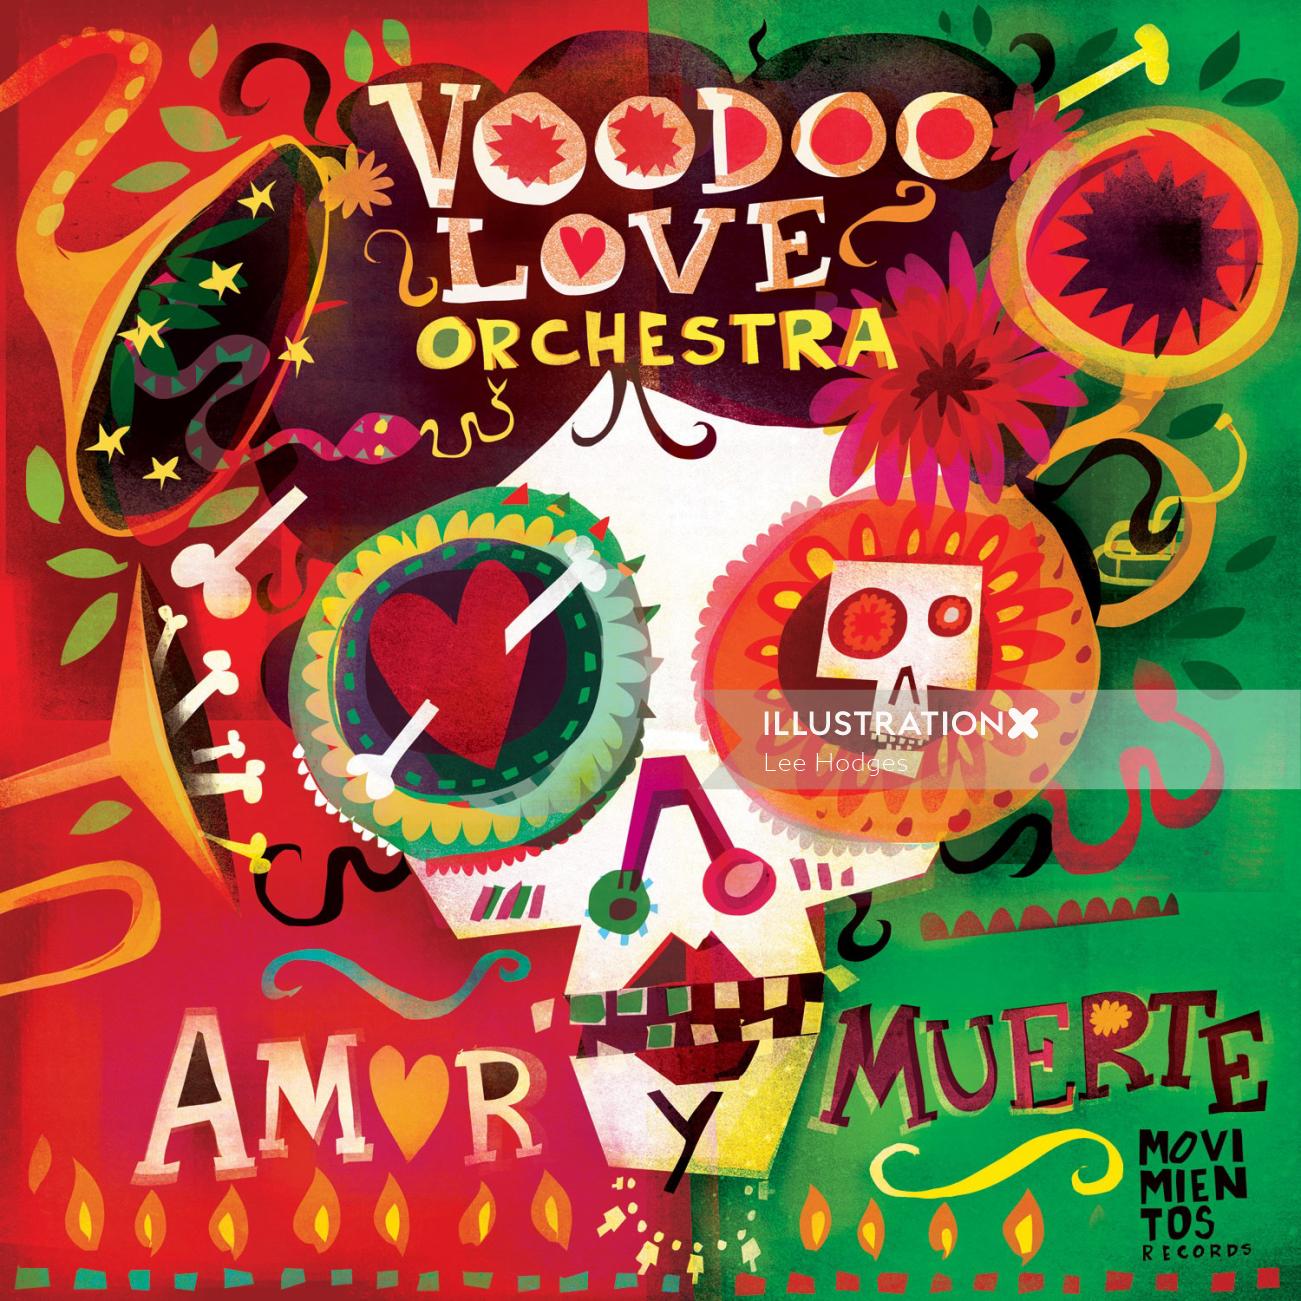 Lee Hodges 为 Voodoo Love Orchestra 专辑的封面艺术